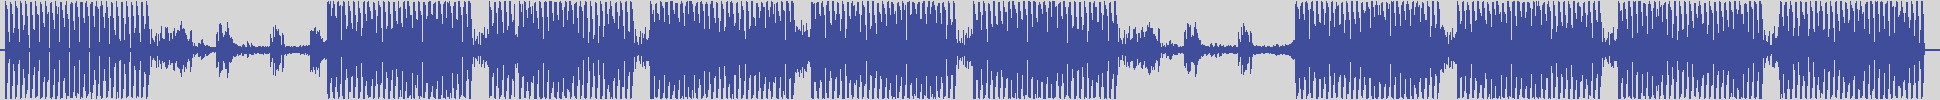 nf_boyz_records [NFY063] Johnny Divine - Small Steps [Cornelius's Dream Mix] audio wave form